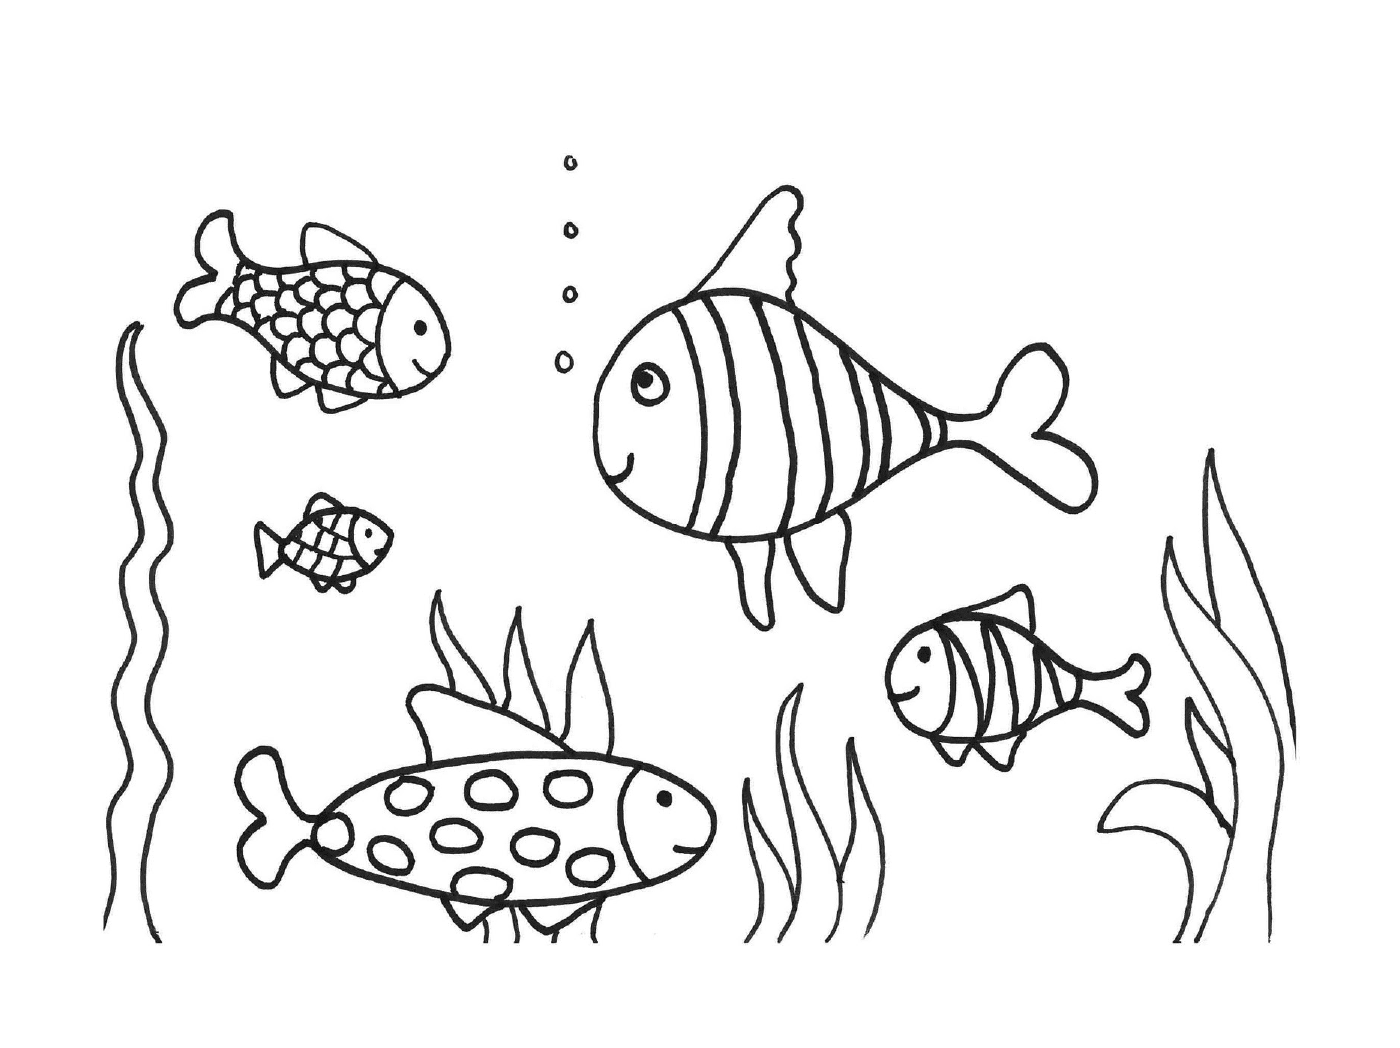  Muitos peixes na água 